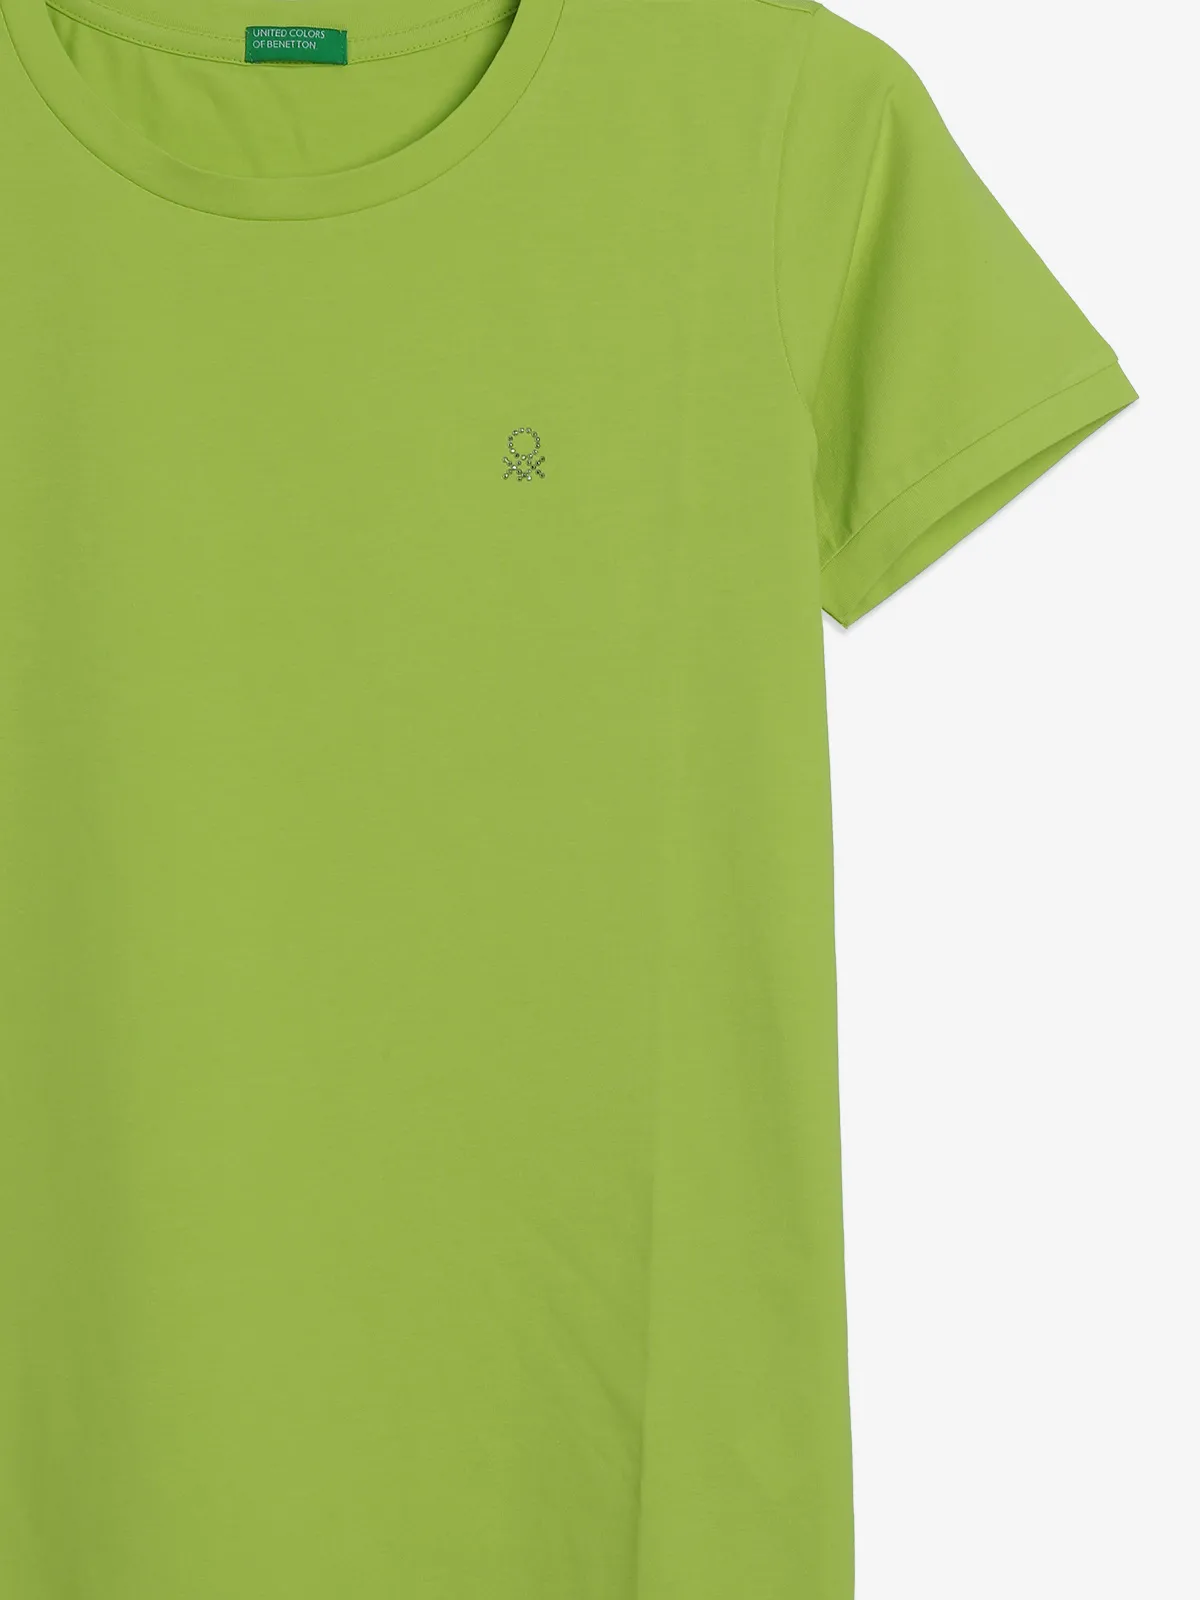 UCB plain green cotton t-shirt